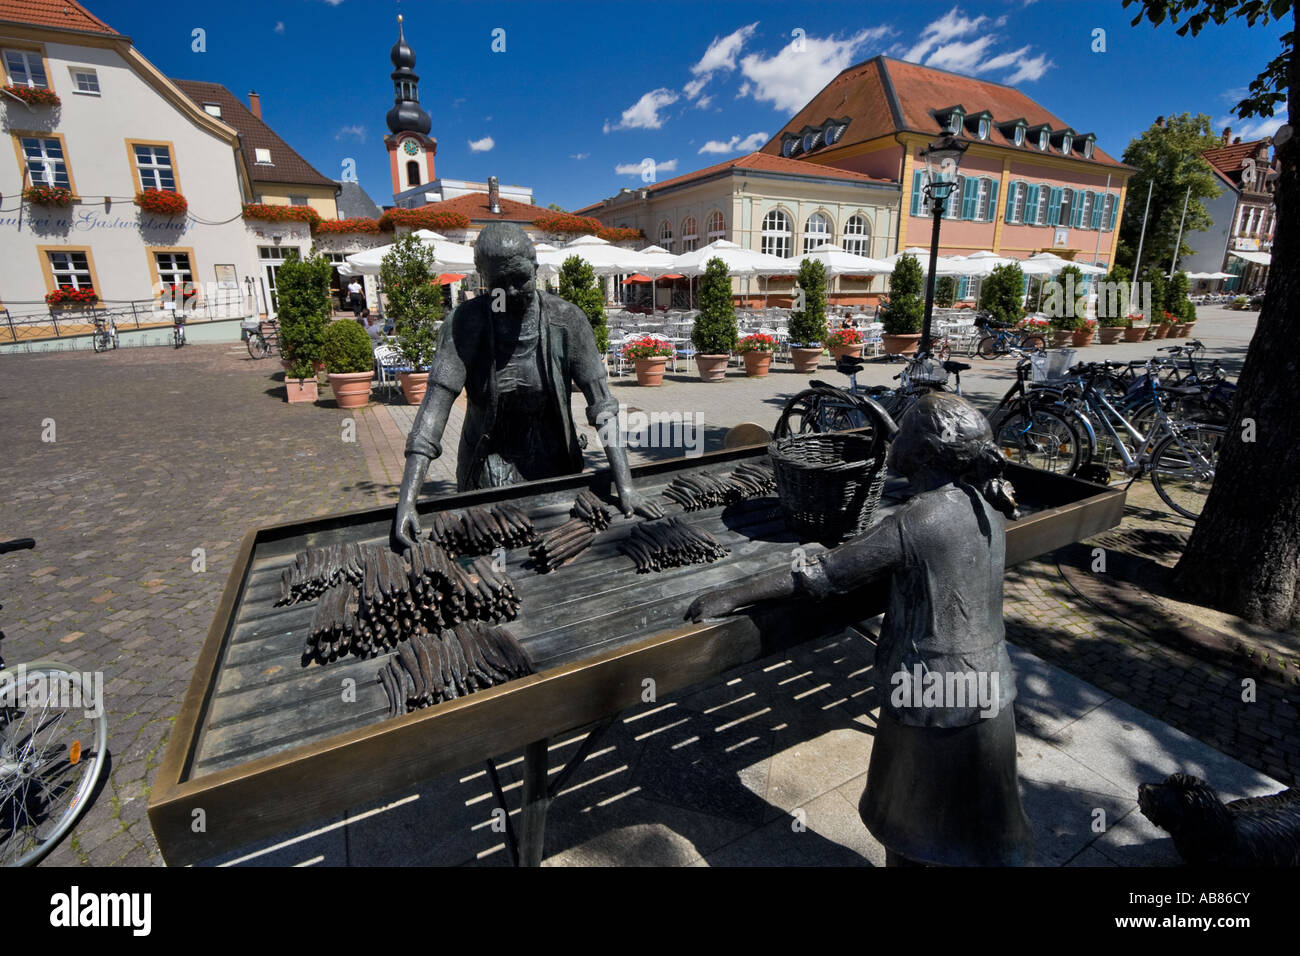 Statue of an asparagus vendor on Schwetzingen market place, near Heidelberg Germany Stock Photo